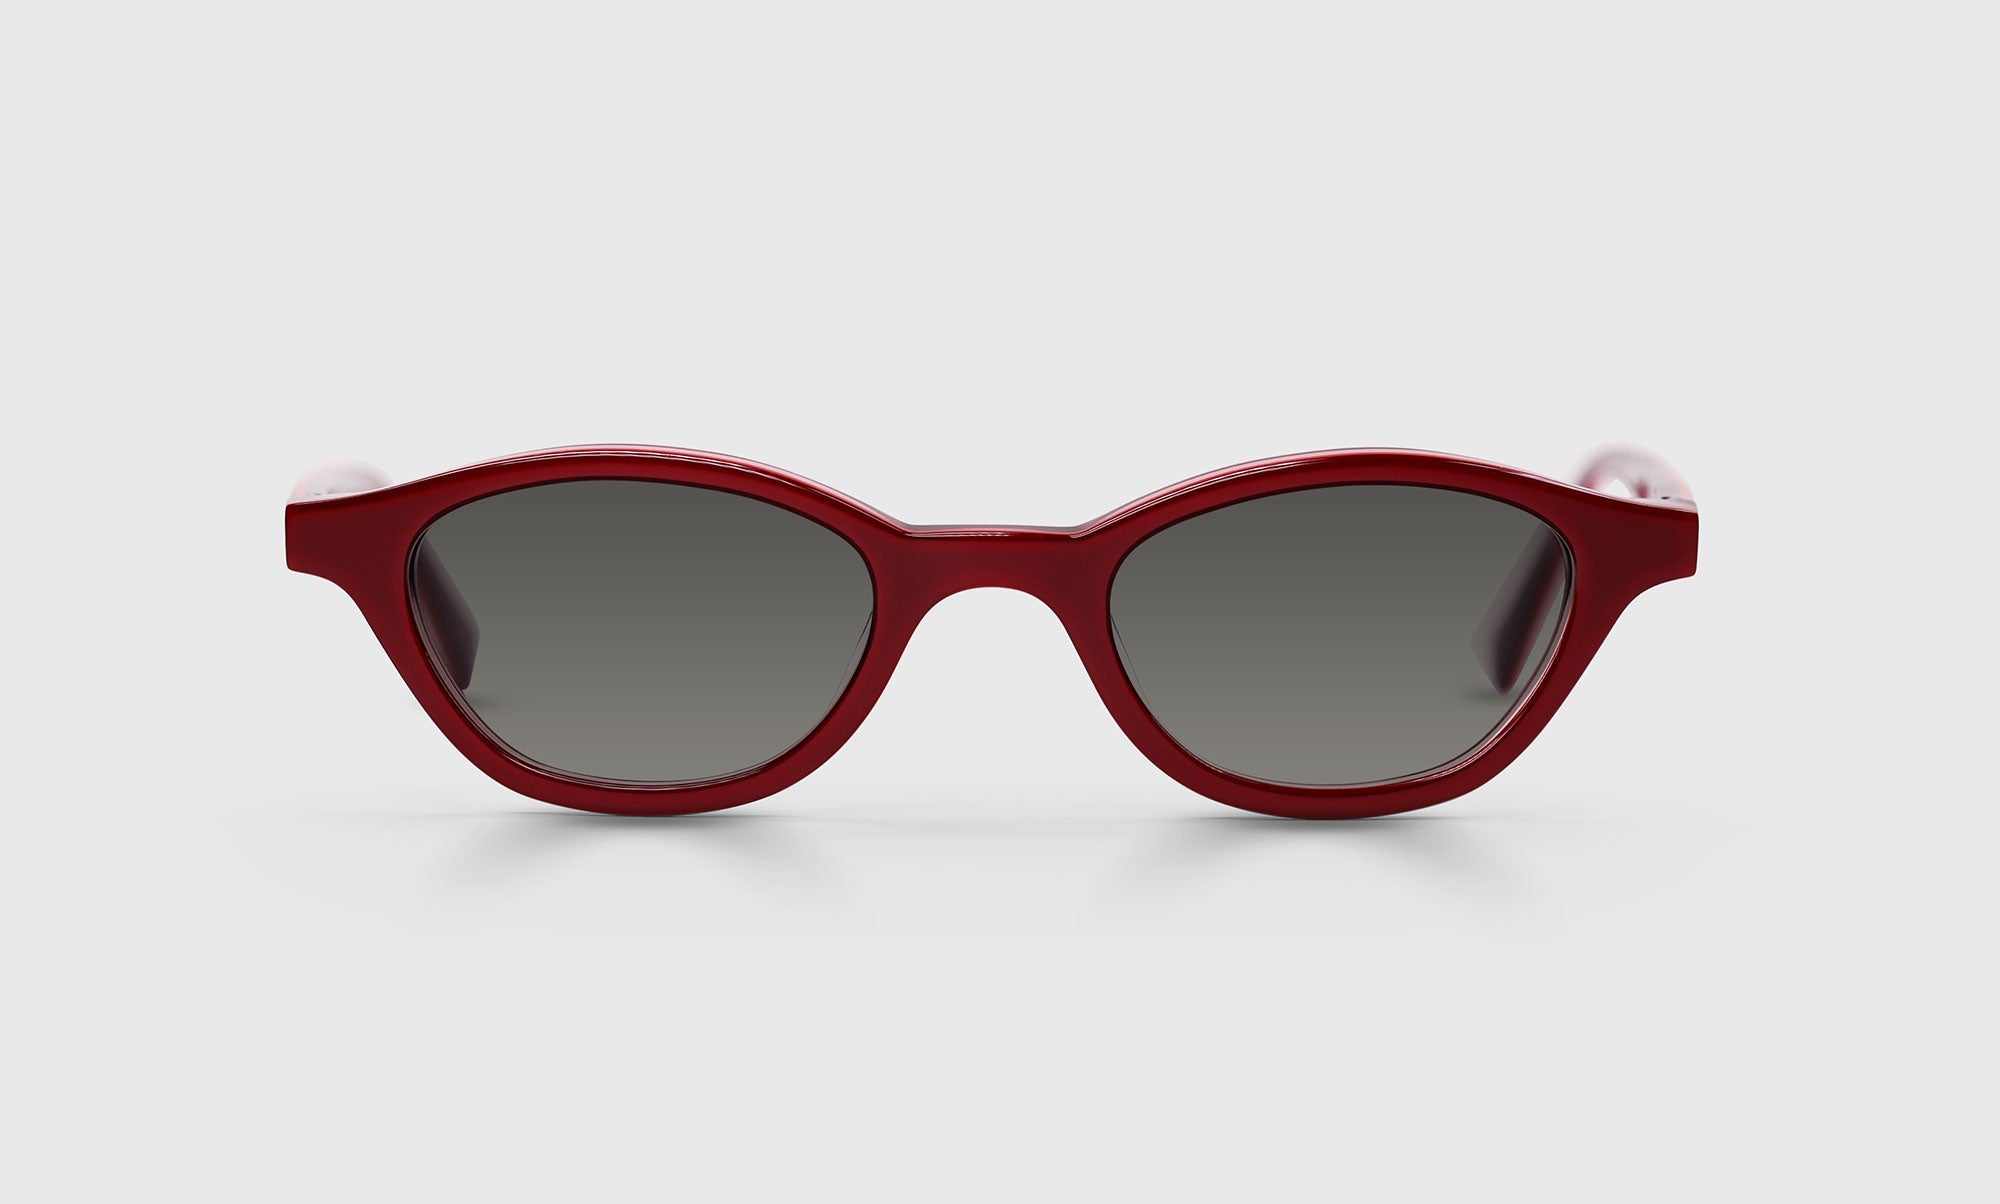 01-pg | eyebobs Pickwick, Oval, Average, Bifocal Reader Sunglasses, Polarized Grey Sunglasses